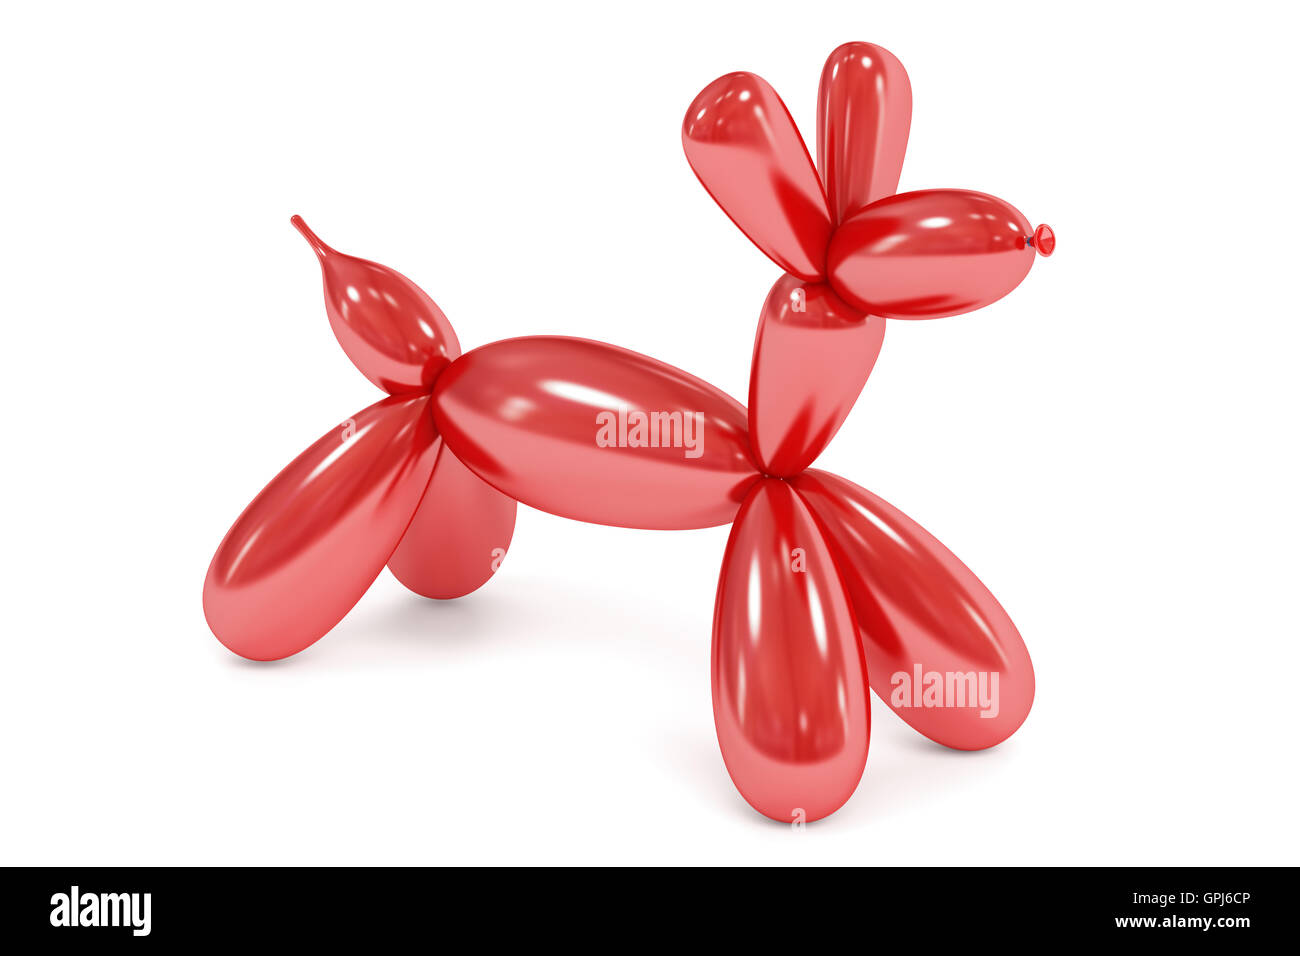 Toy dog puppy balloon, rendu 3D Banque D'Images